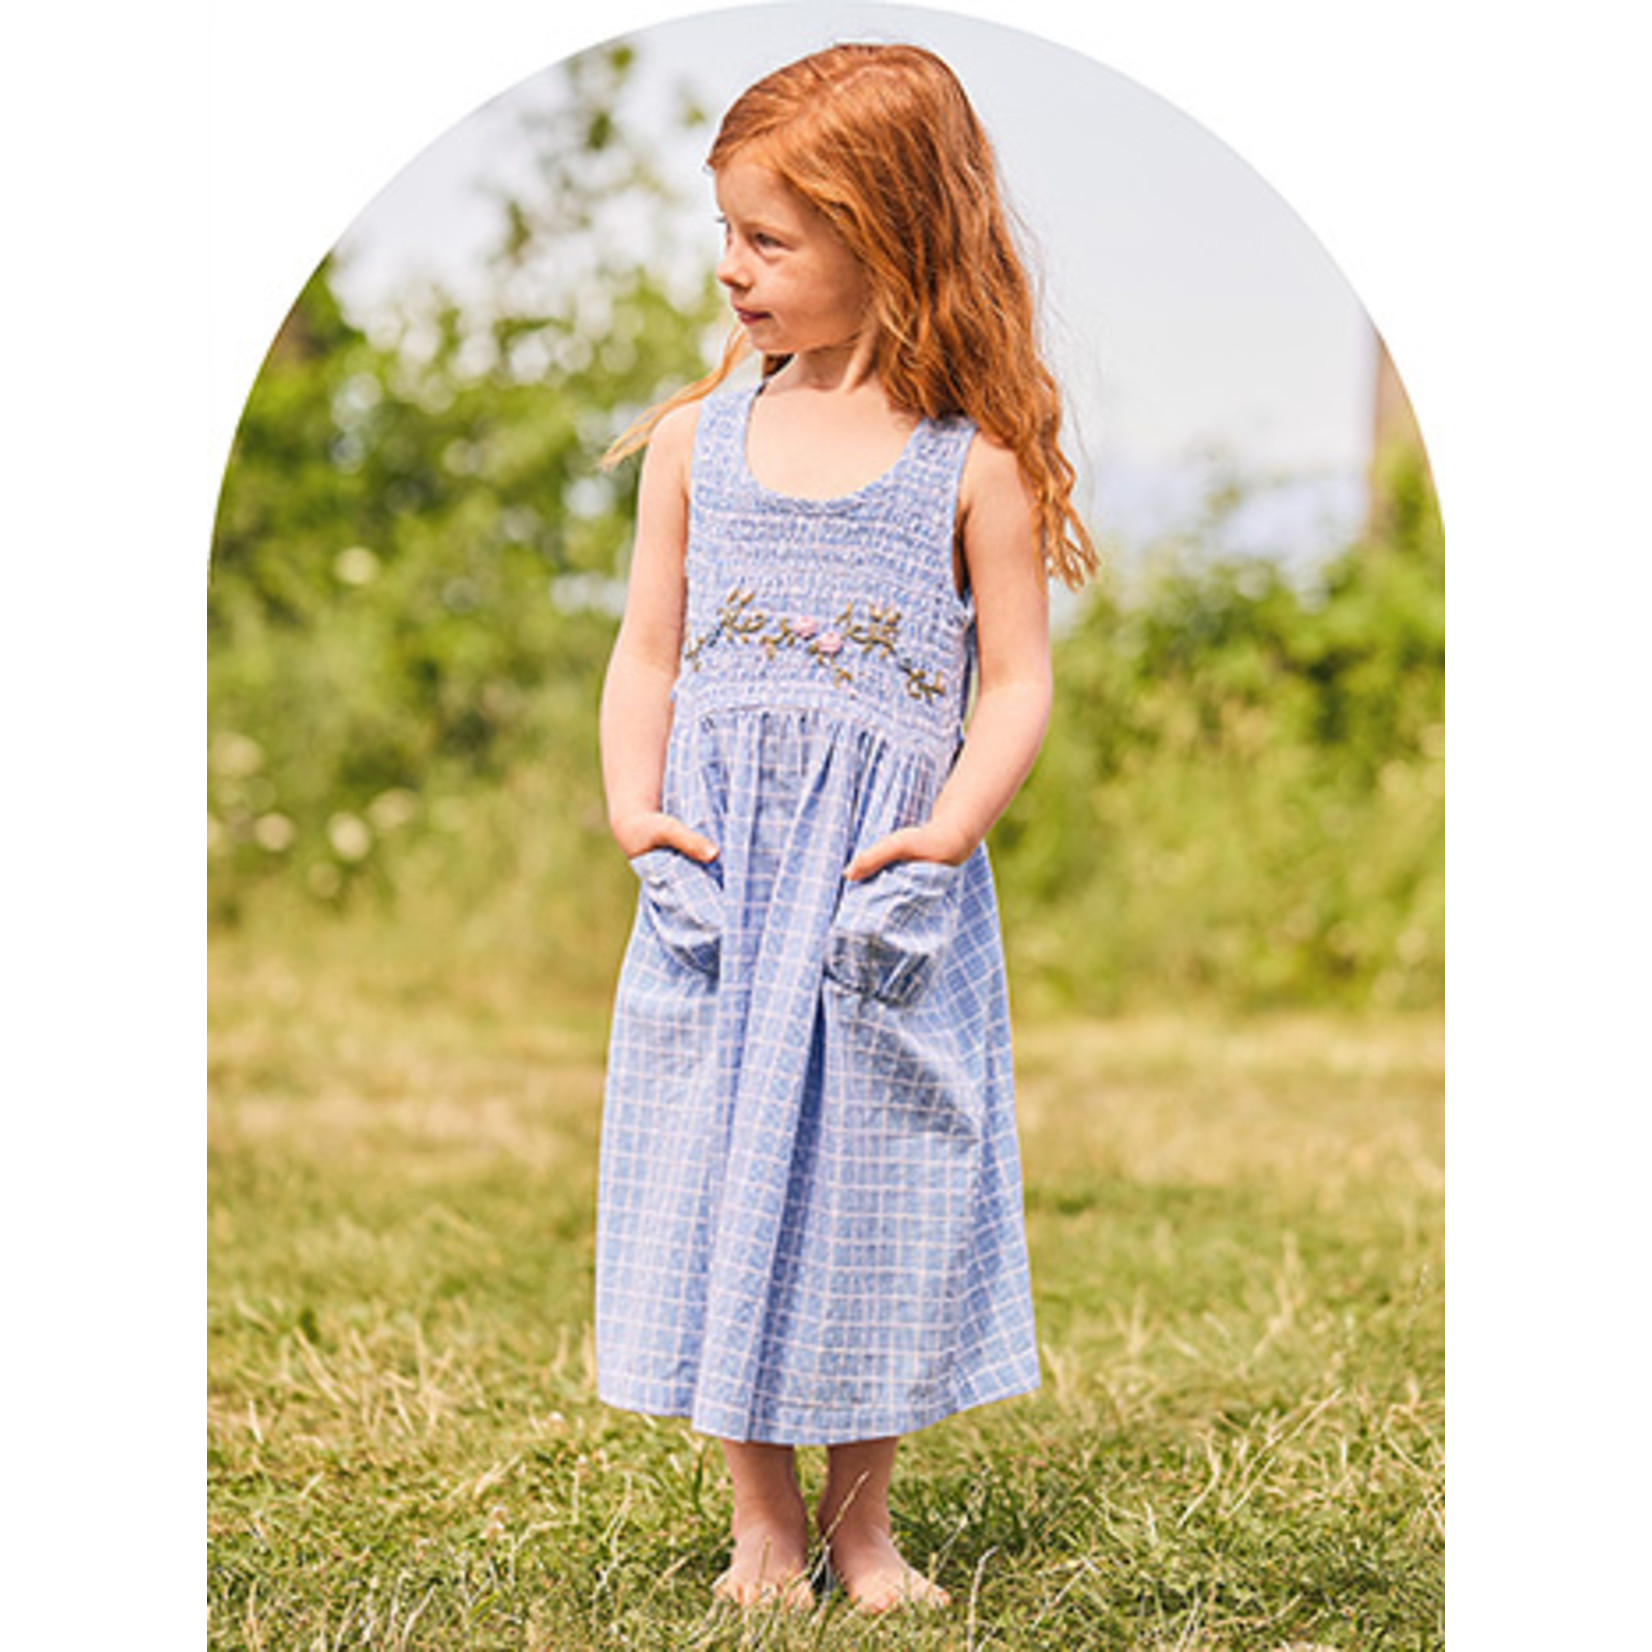 April Cornell Addy Little Girl Dress Blue 6